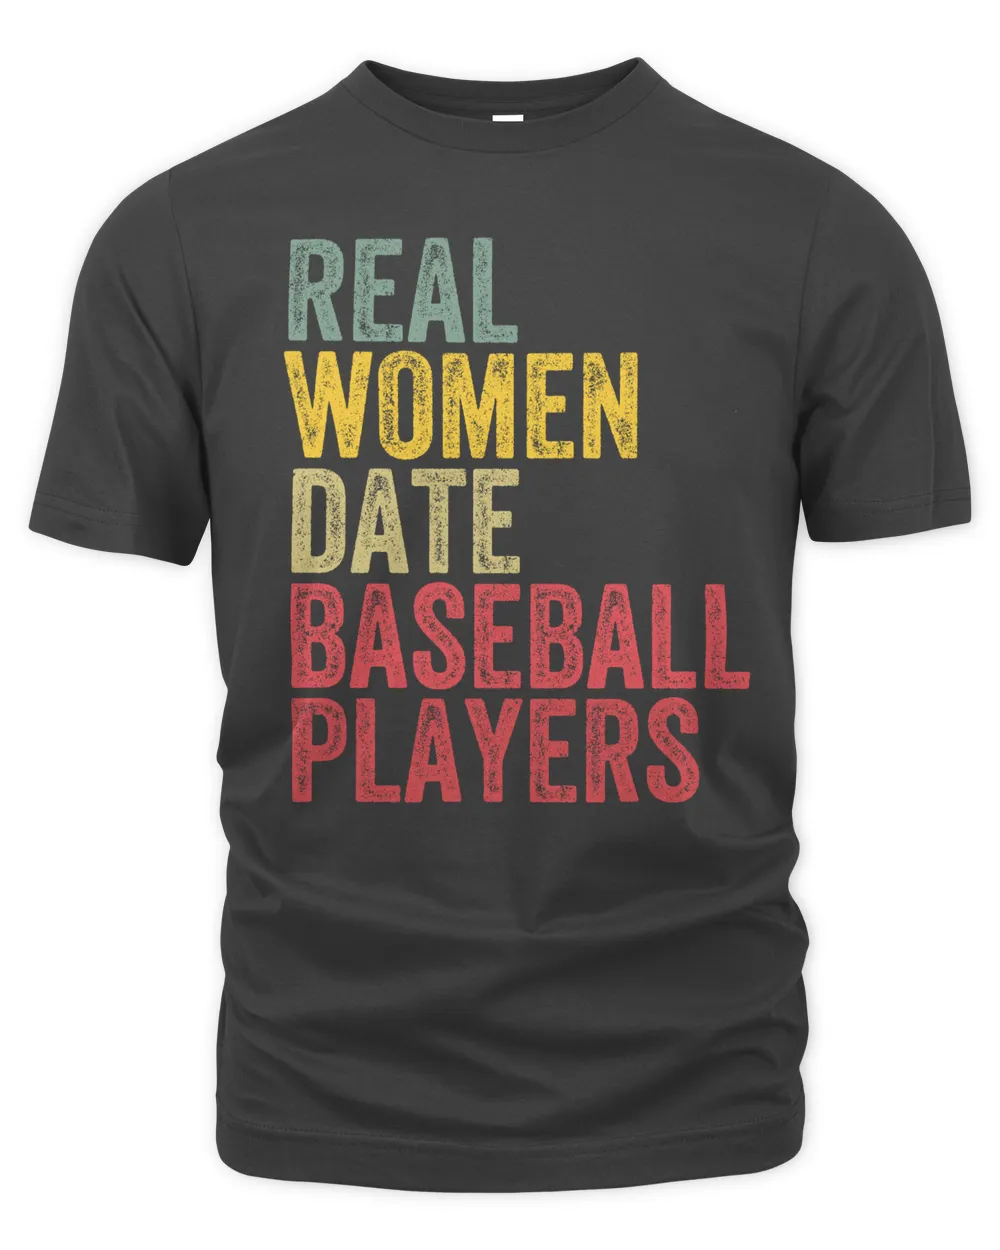 Real women date baseball players